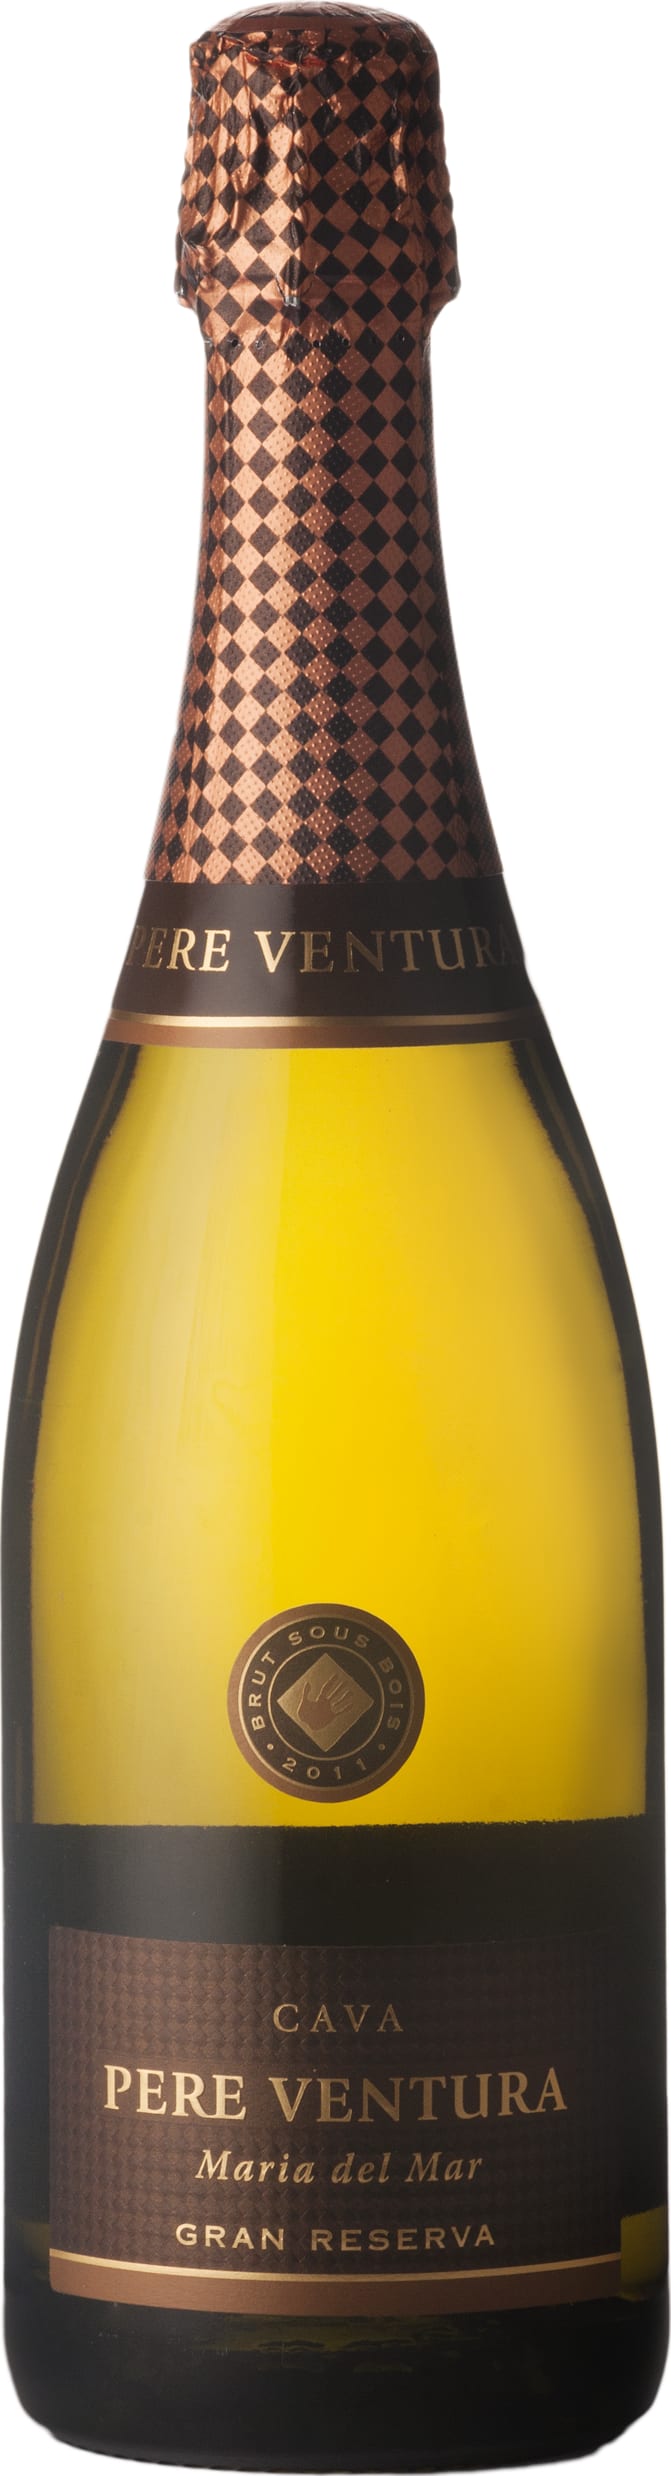 Pere Ventura Tresor Cuvee Gran Reserva 2016 75cl - Buy Pere Ventura Wines from GREAT WINES DIRECT wine shop